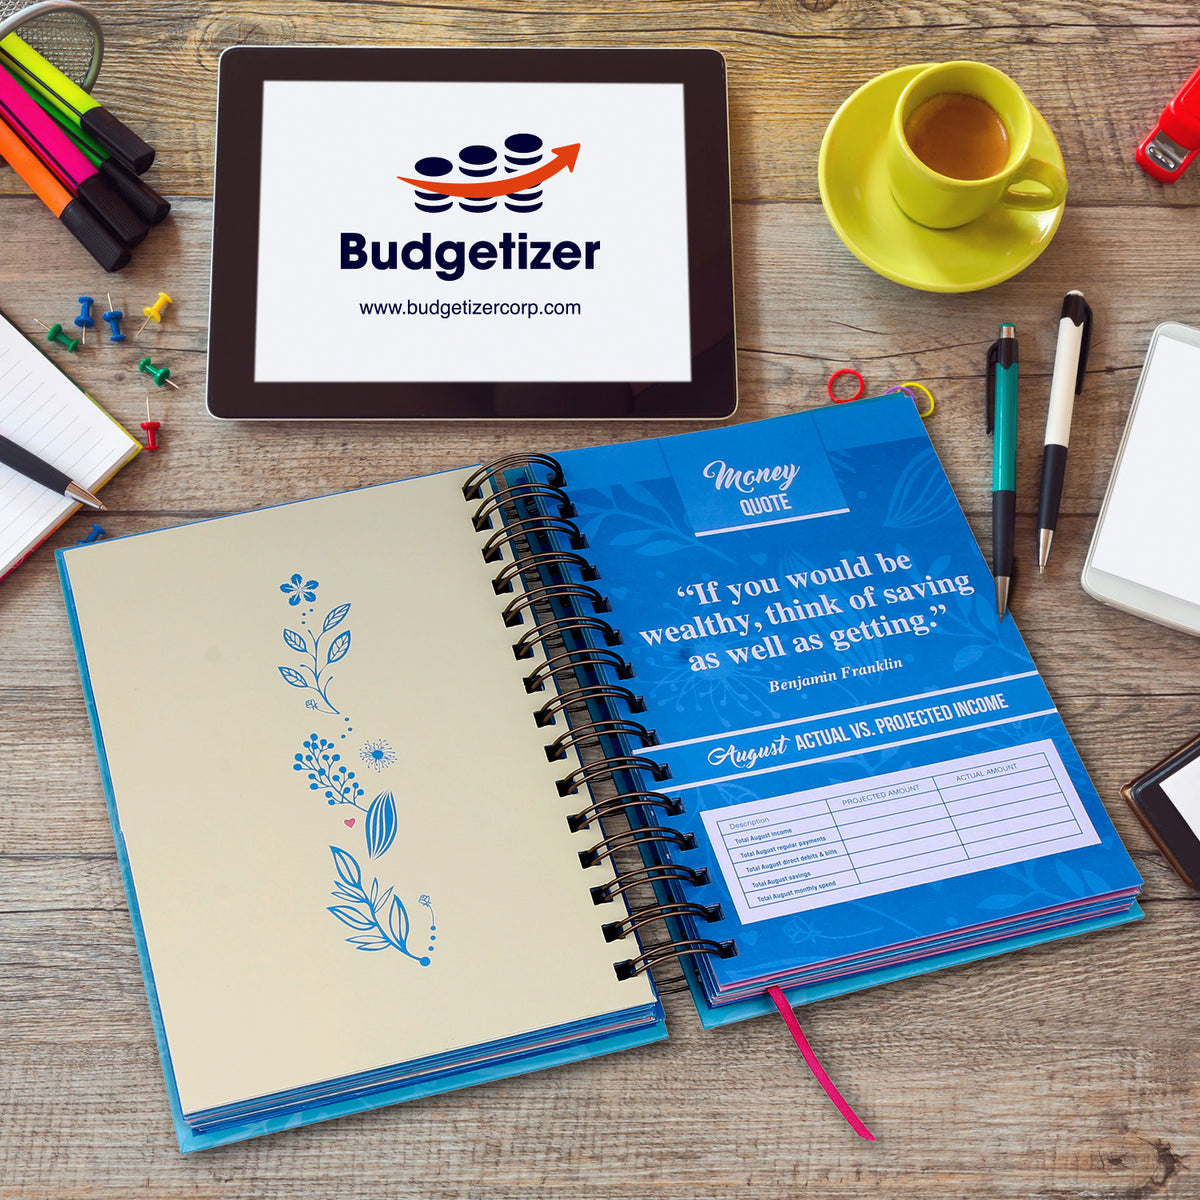 budget planner book uk